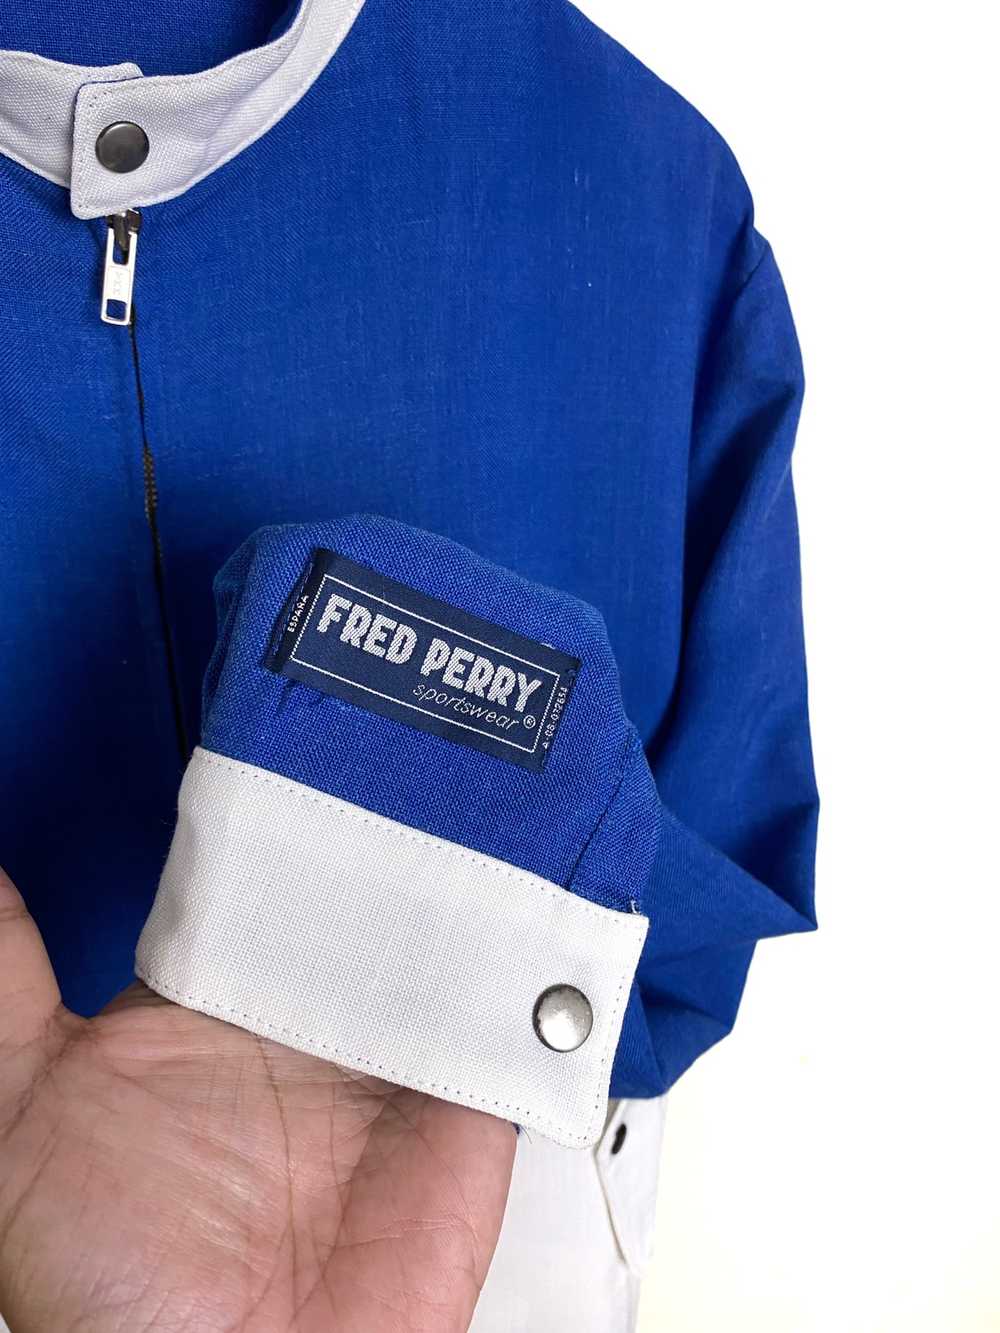 Vintage - Vintage Fred Perry Sportswear Jacket - image 4